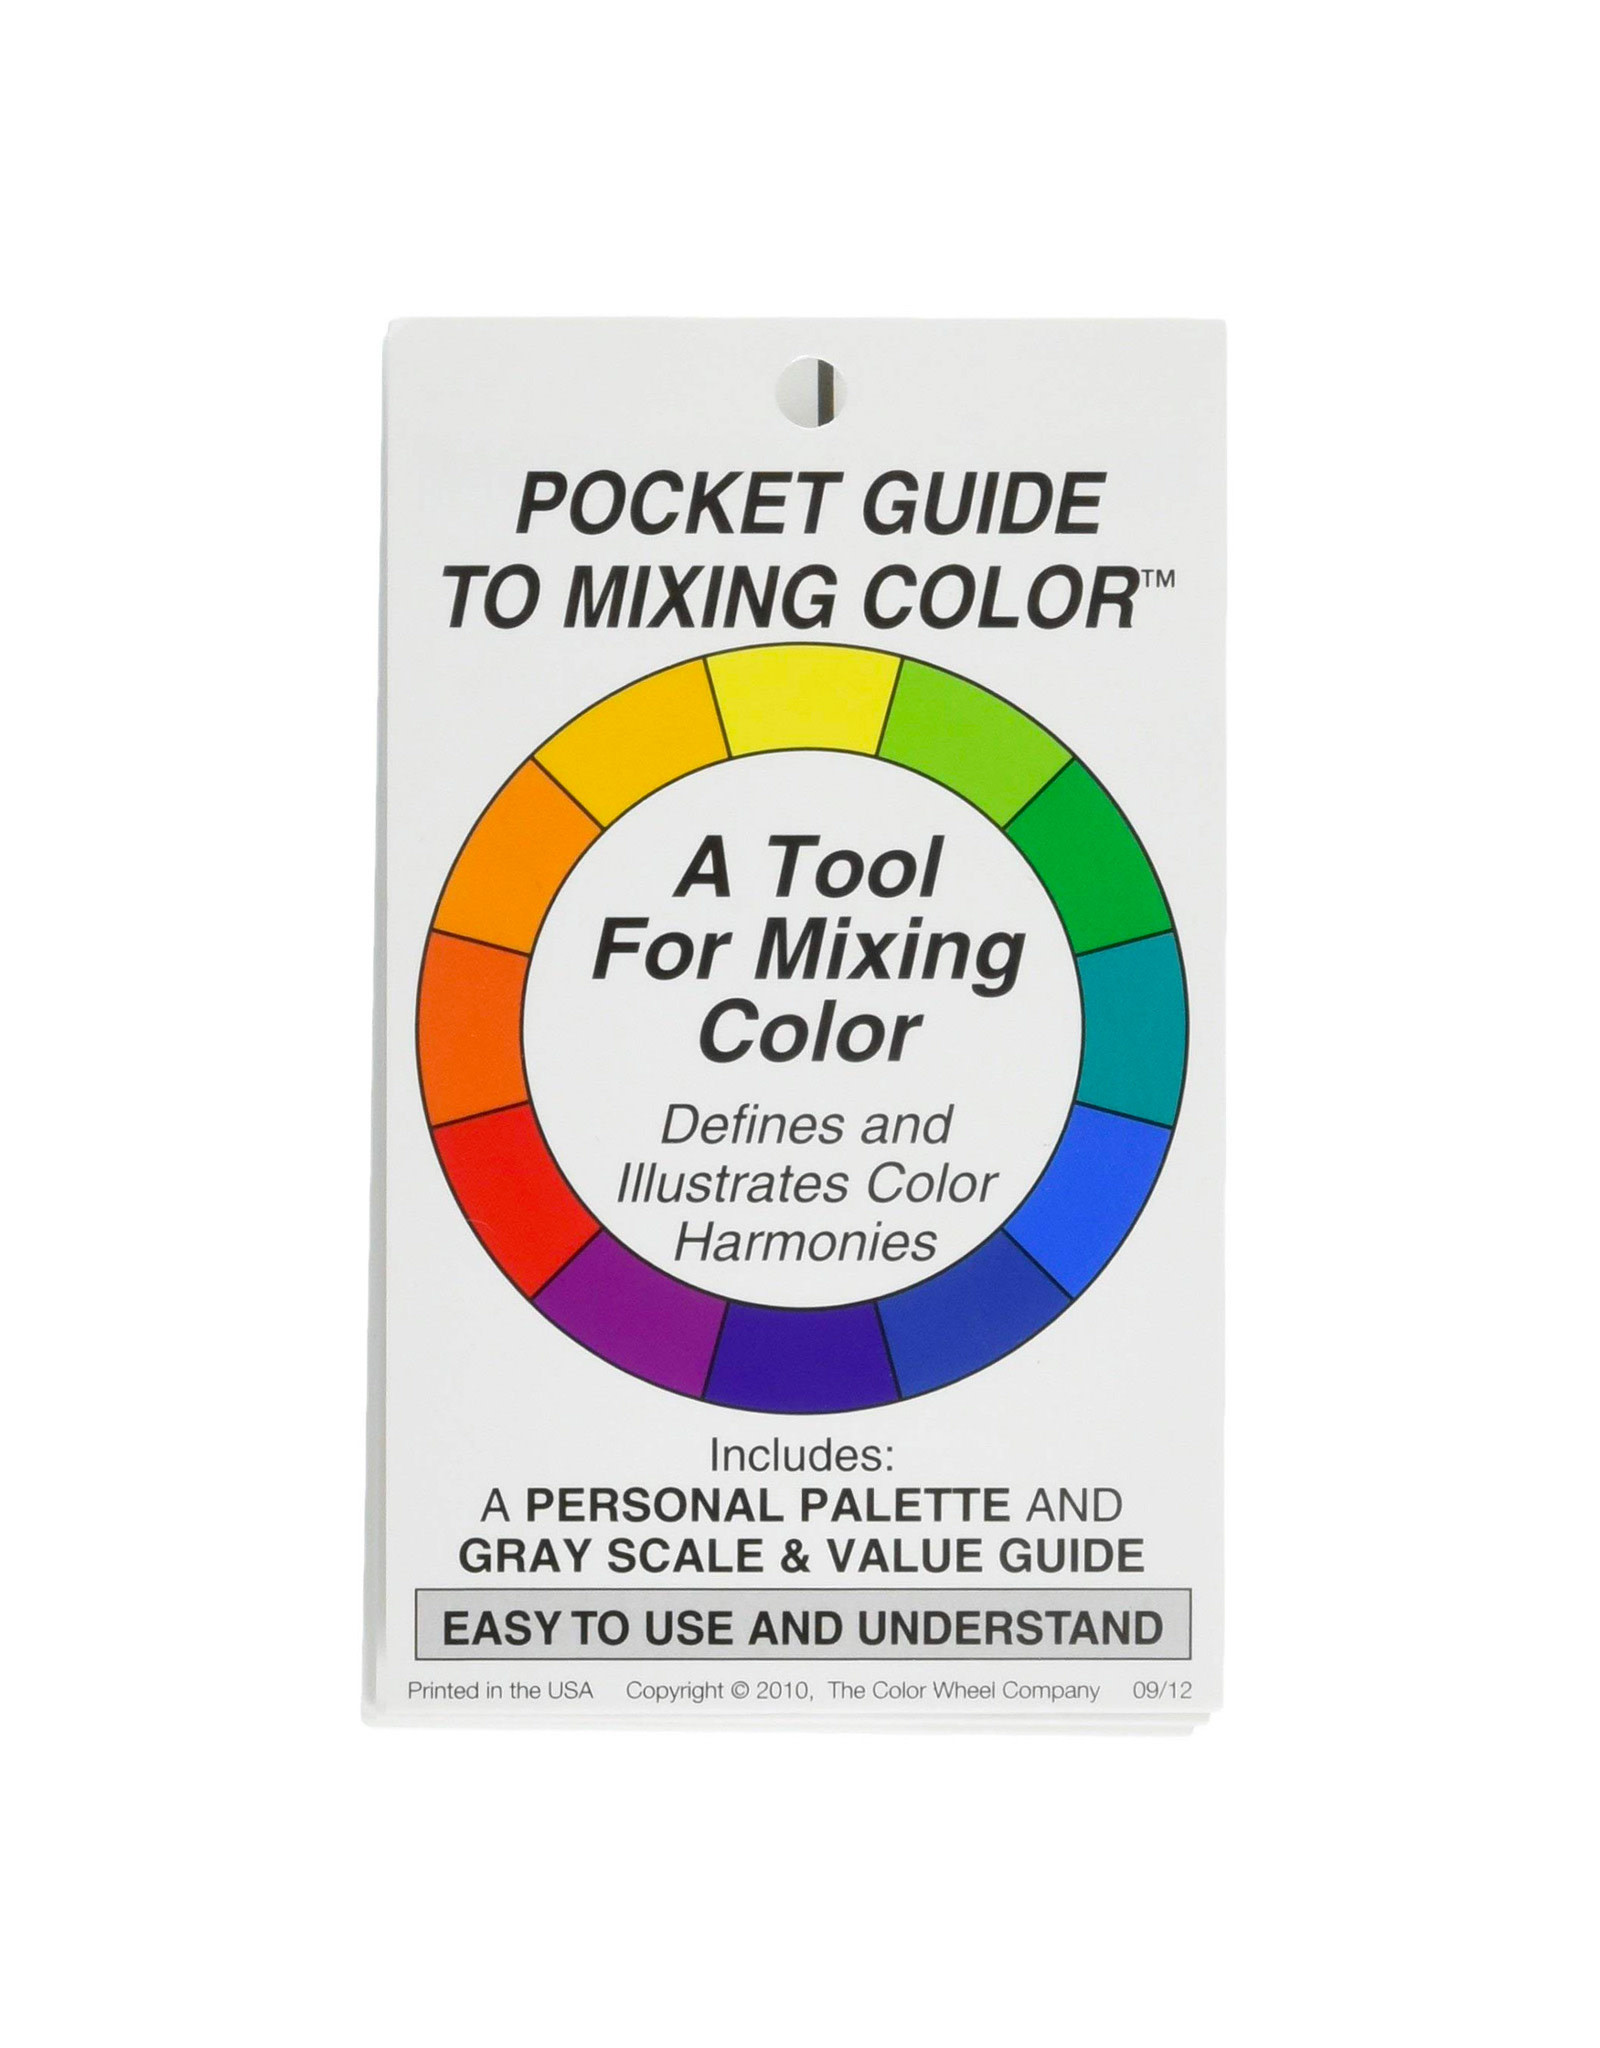 COLOR WHEEL COMPANY Color Wheel Co. Pocket Guide to Mixing Color 3” x 5”